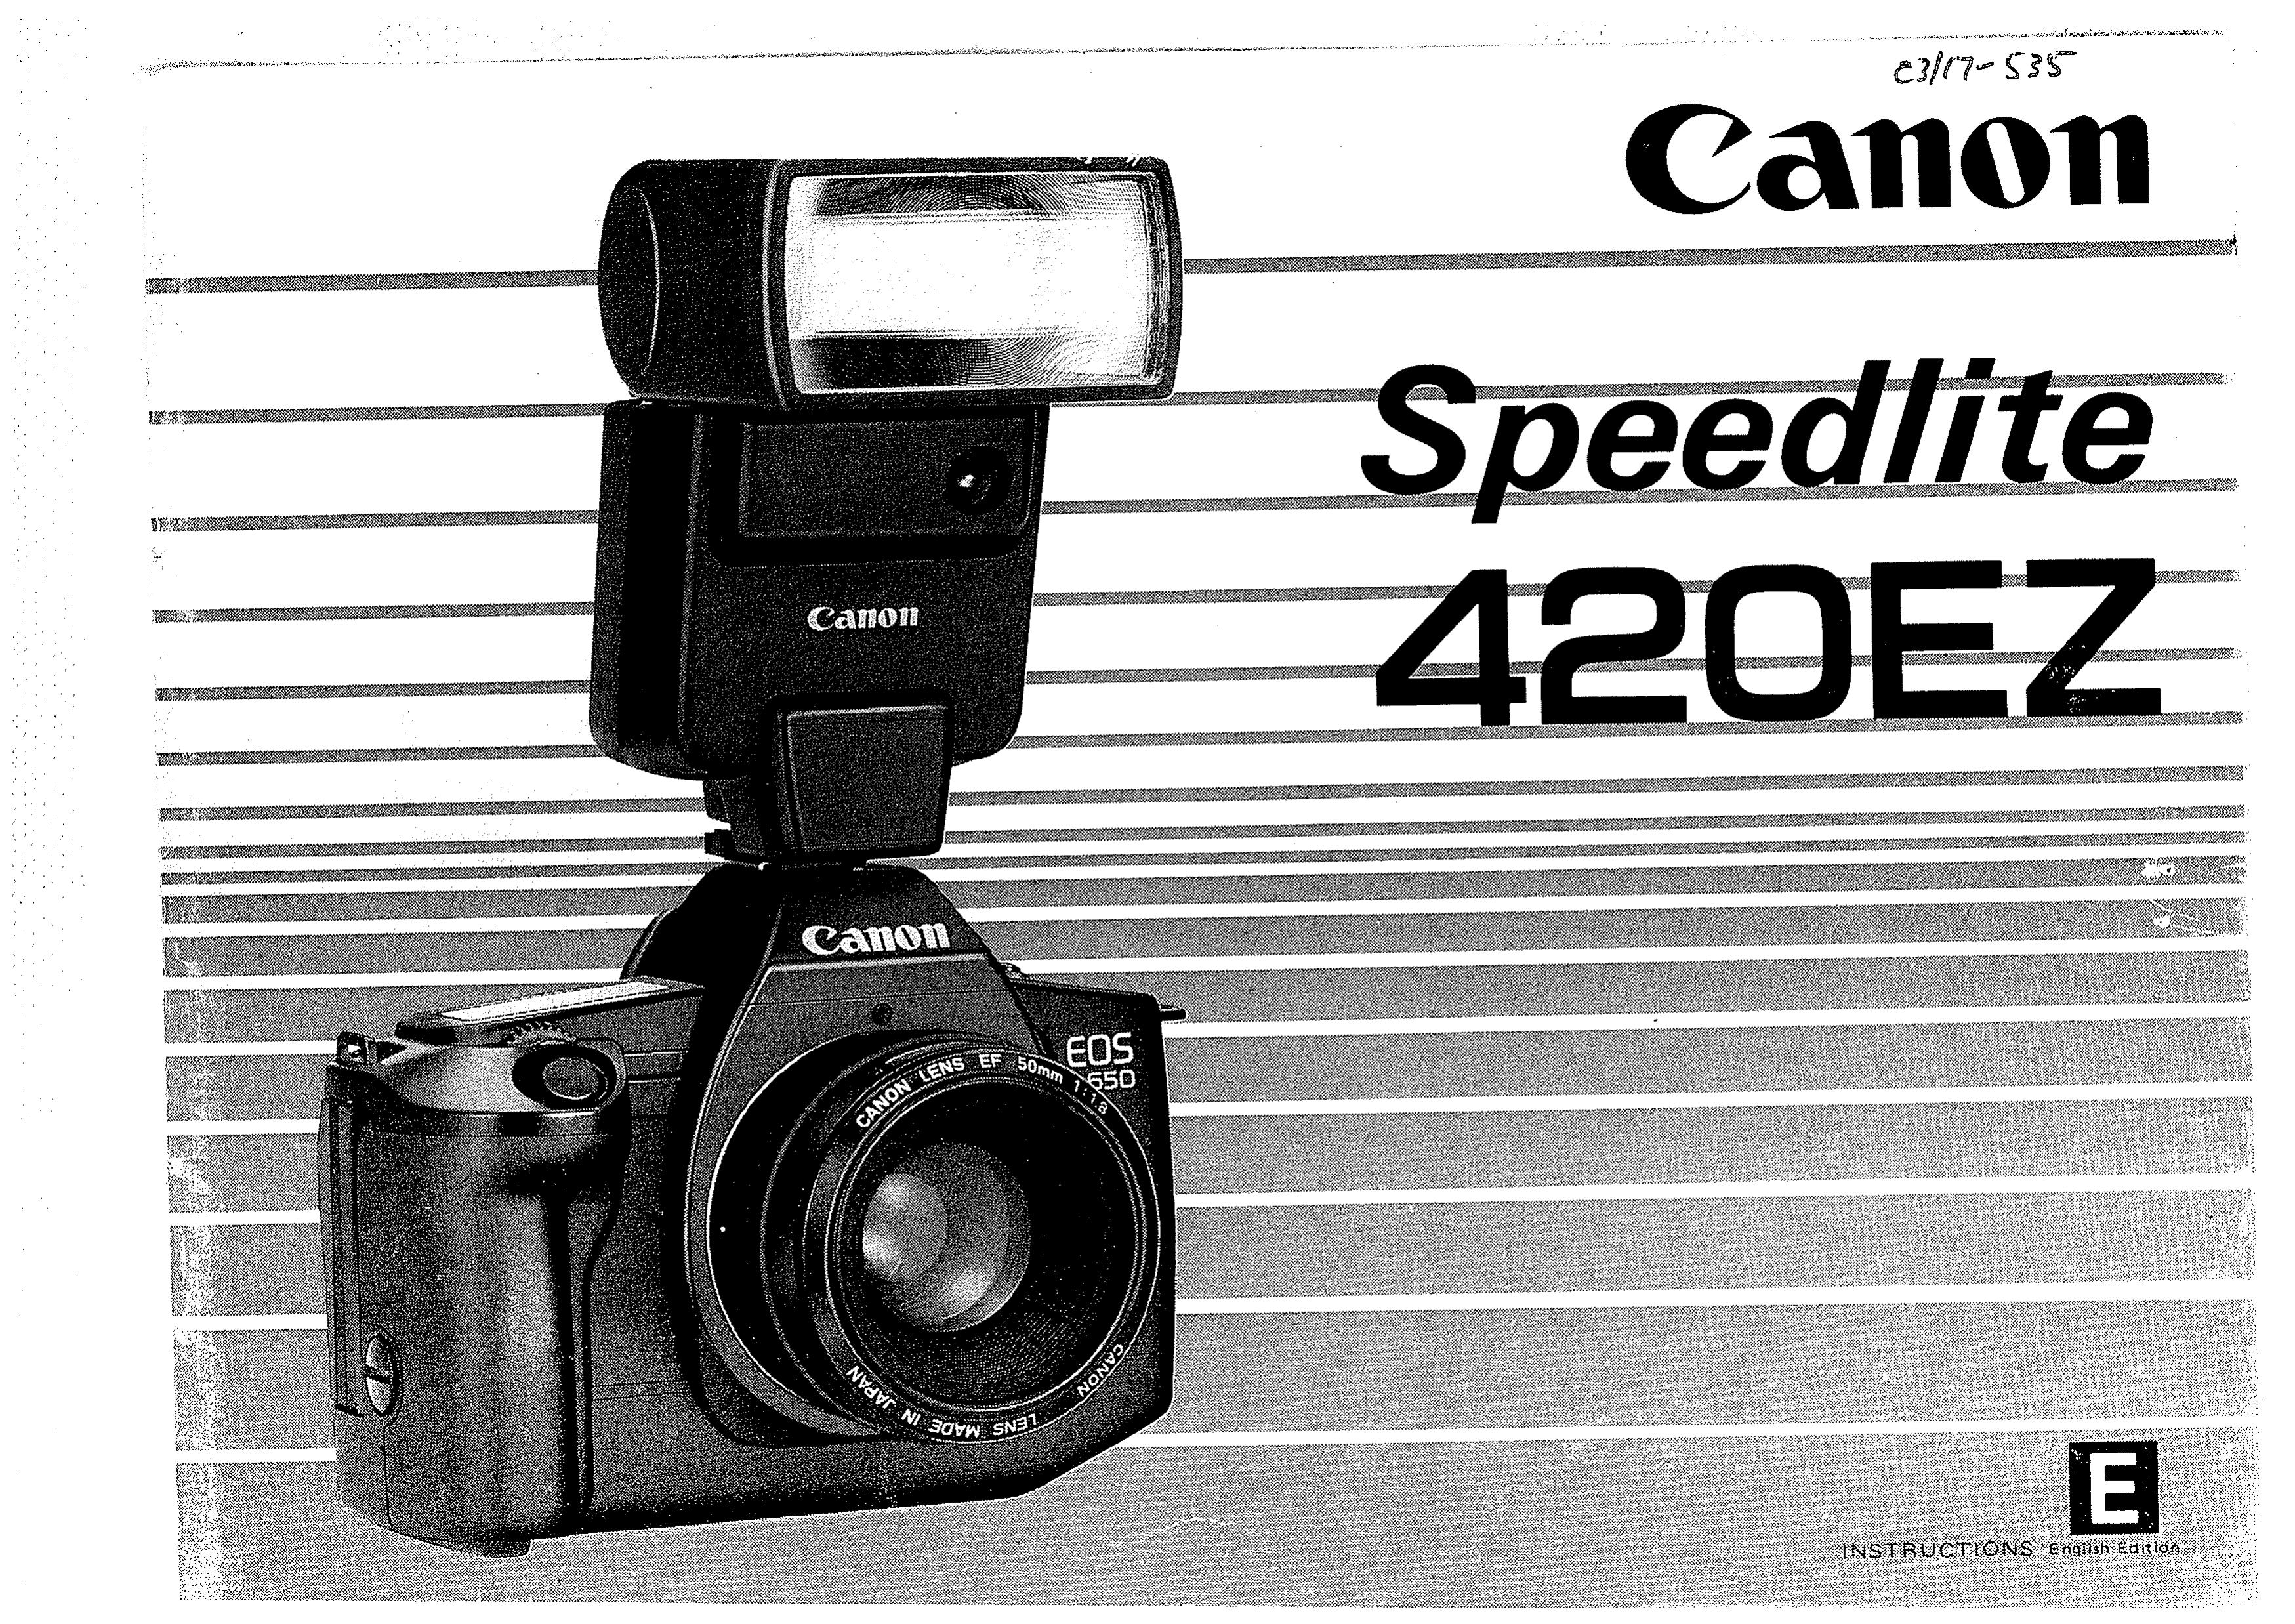 Canon 420 EZ Camera Flash User Manual